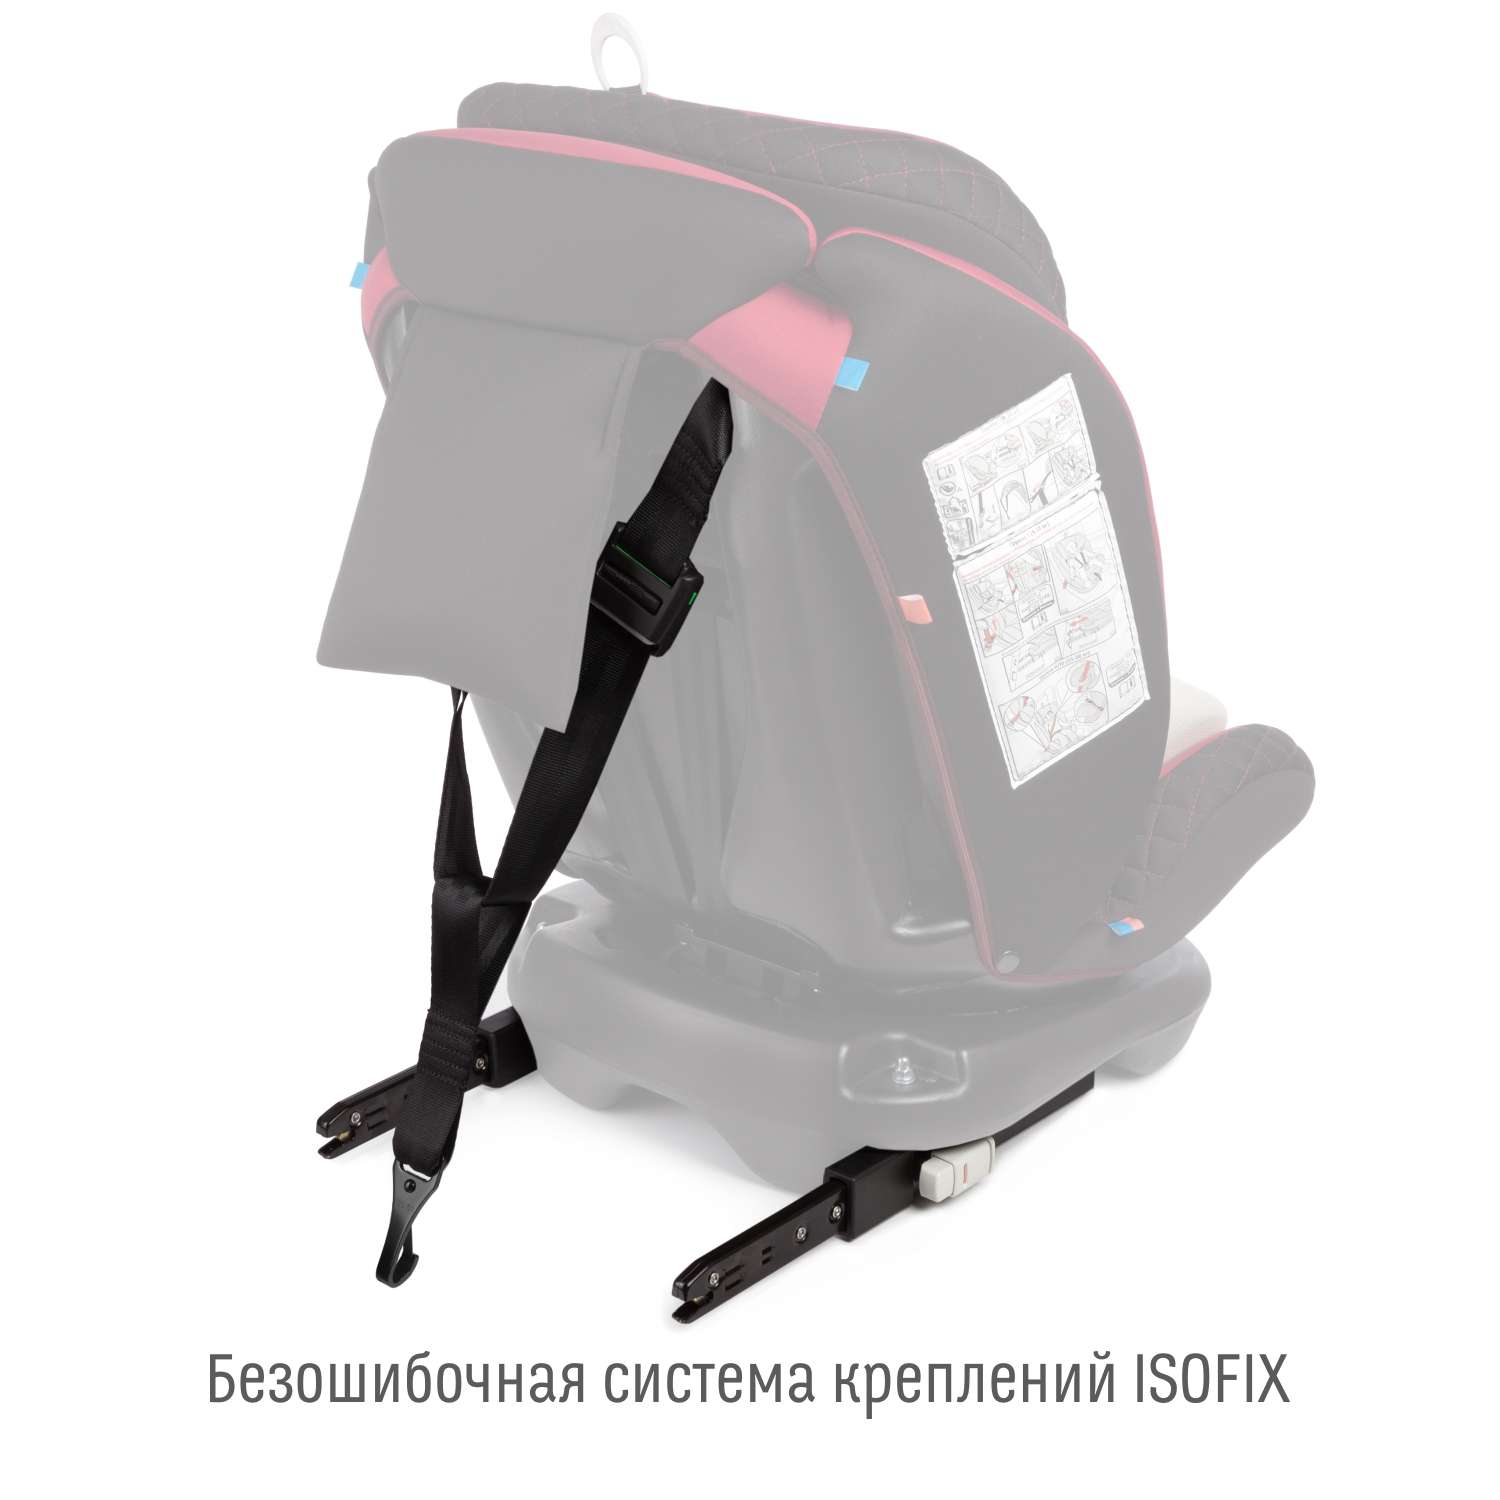 Автомобильное кресло SmartTravel УУД Smart Travel Boss Isofix гр.0+/I/II/III марсала - фото 6